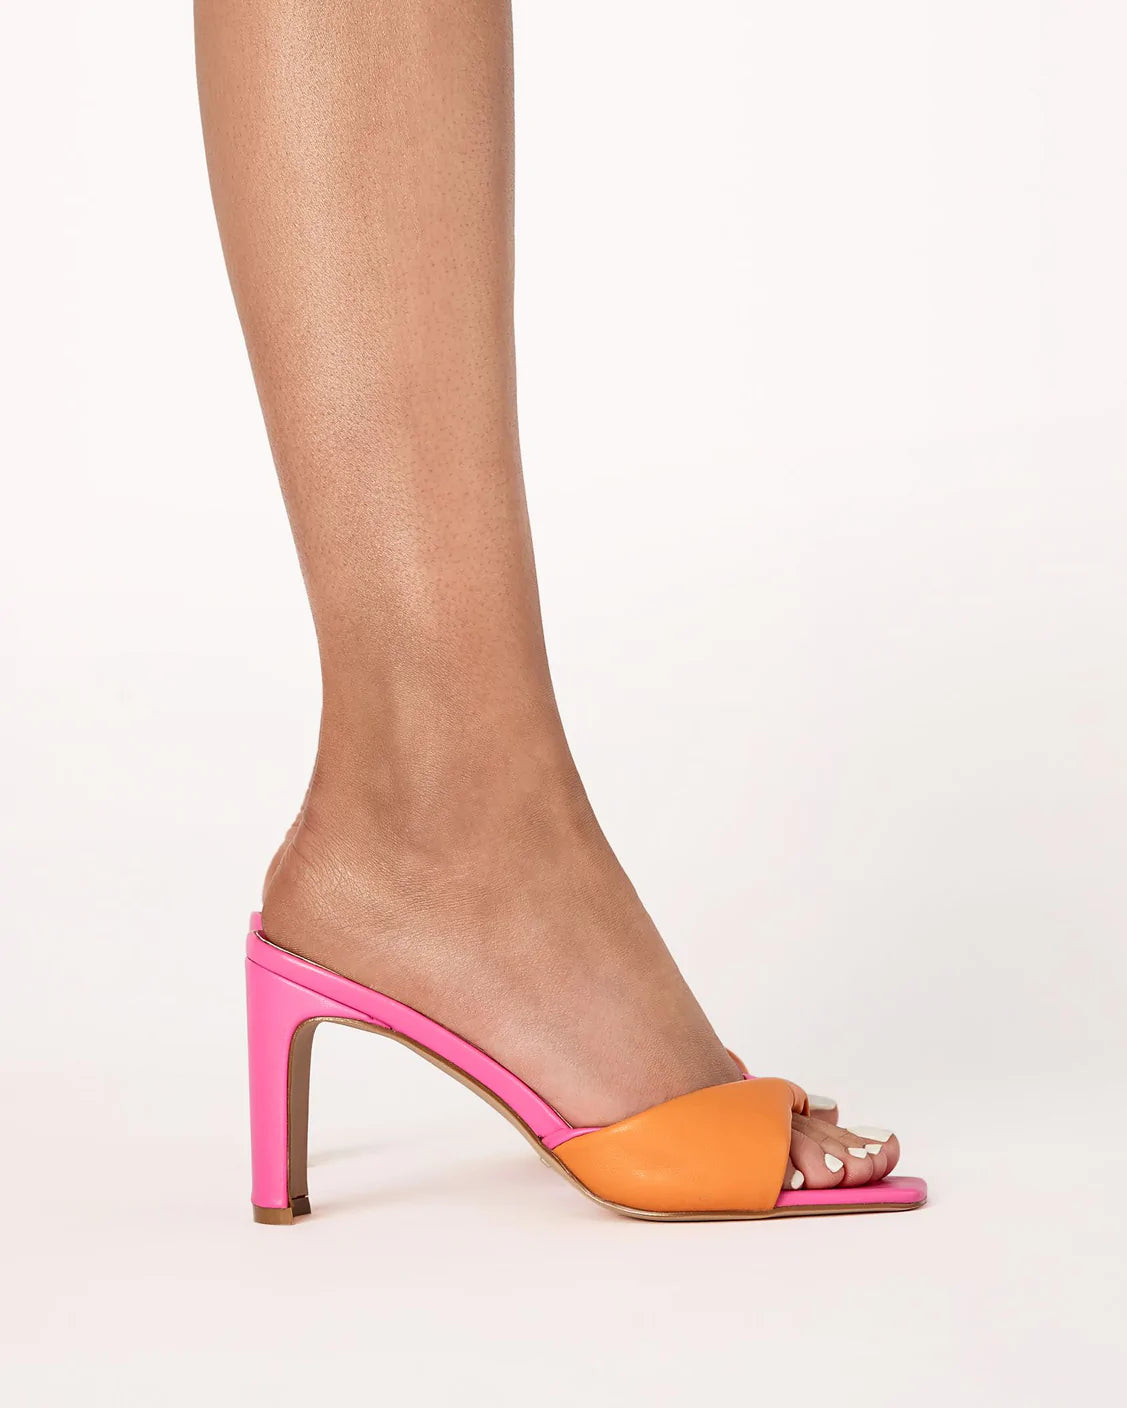 Pine Heel in Rose-Tangerine